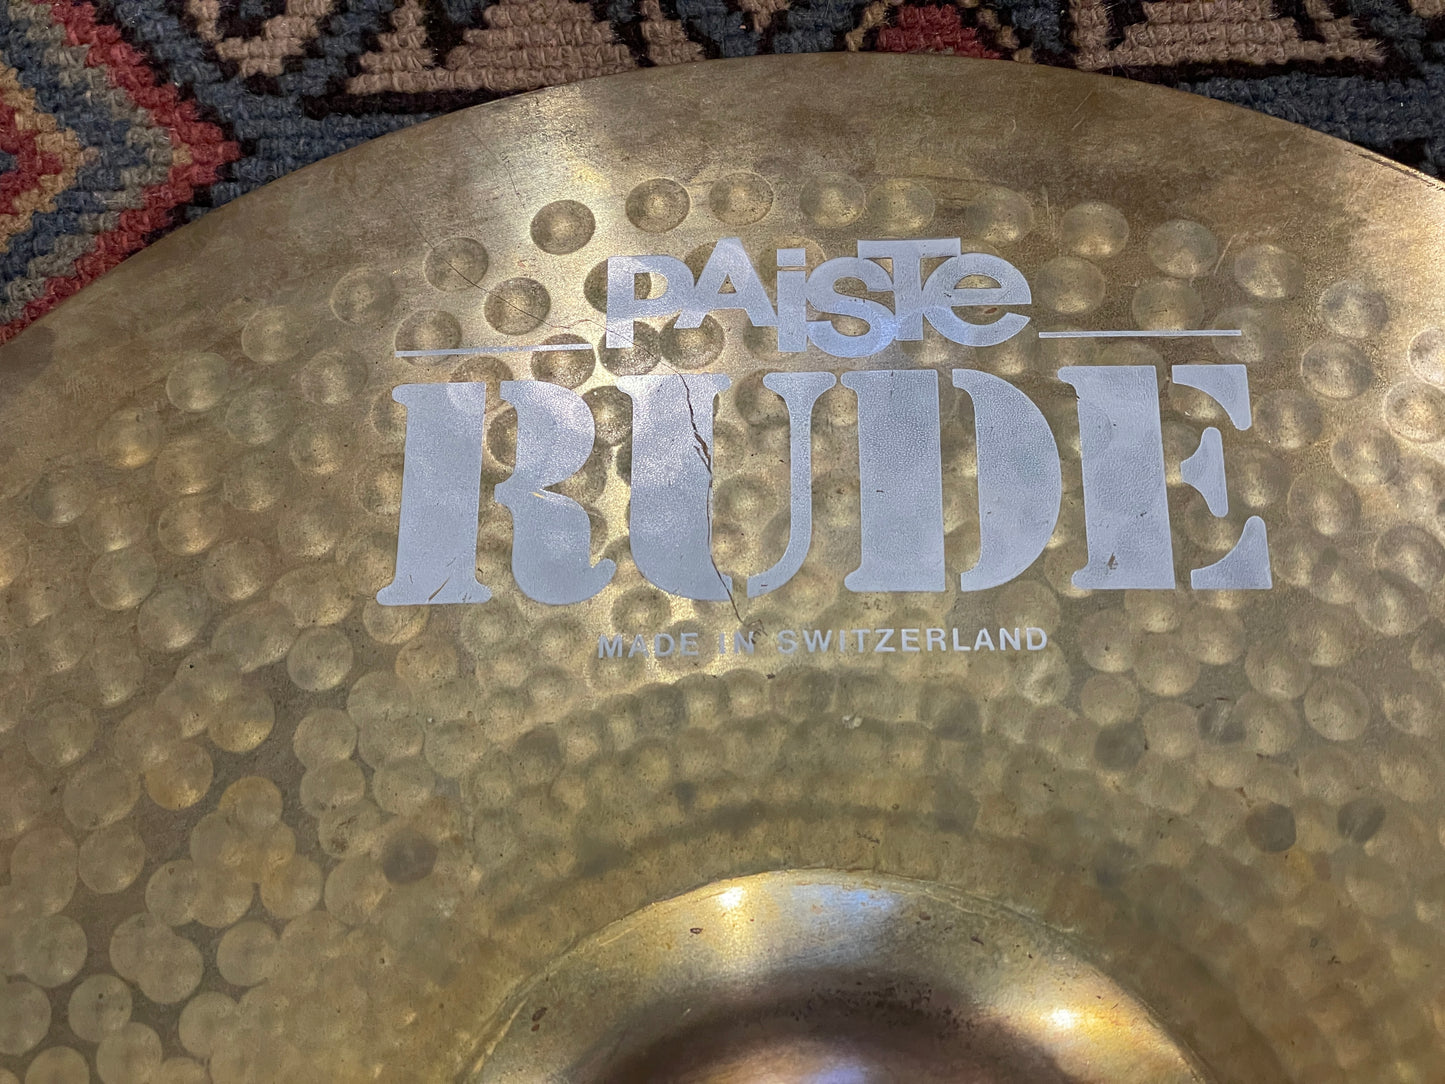 16" Paiste Rude Crash Ride Cymbal 1326g